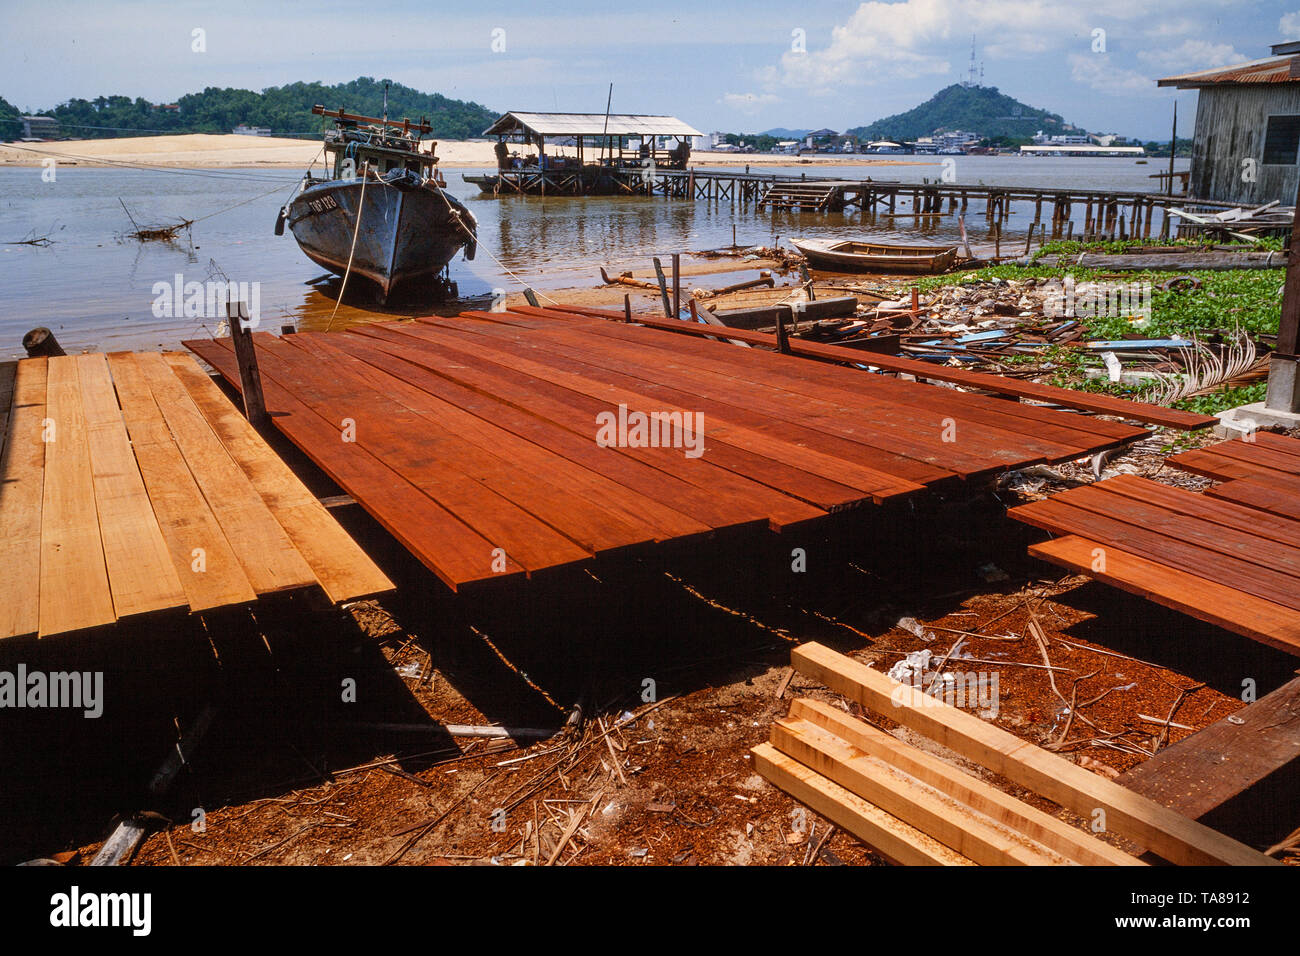 Hardwood planks, boat yard, Malaysia Stock Photo